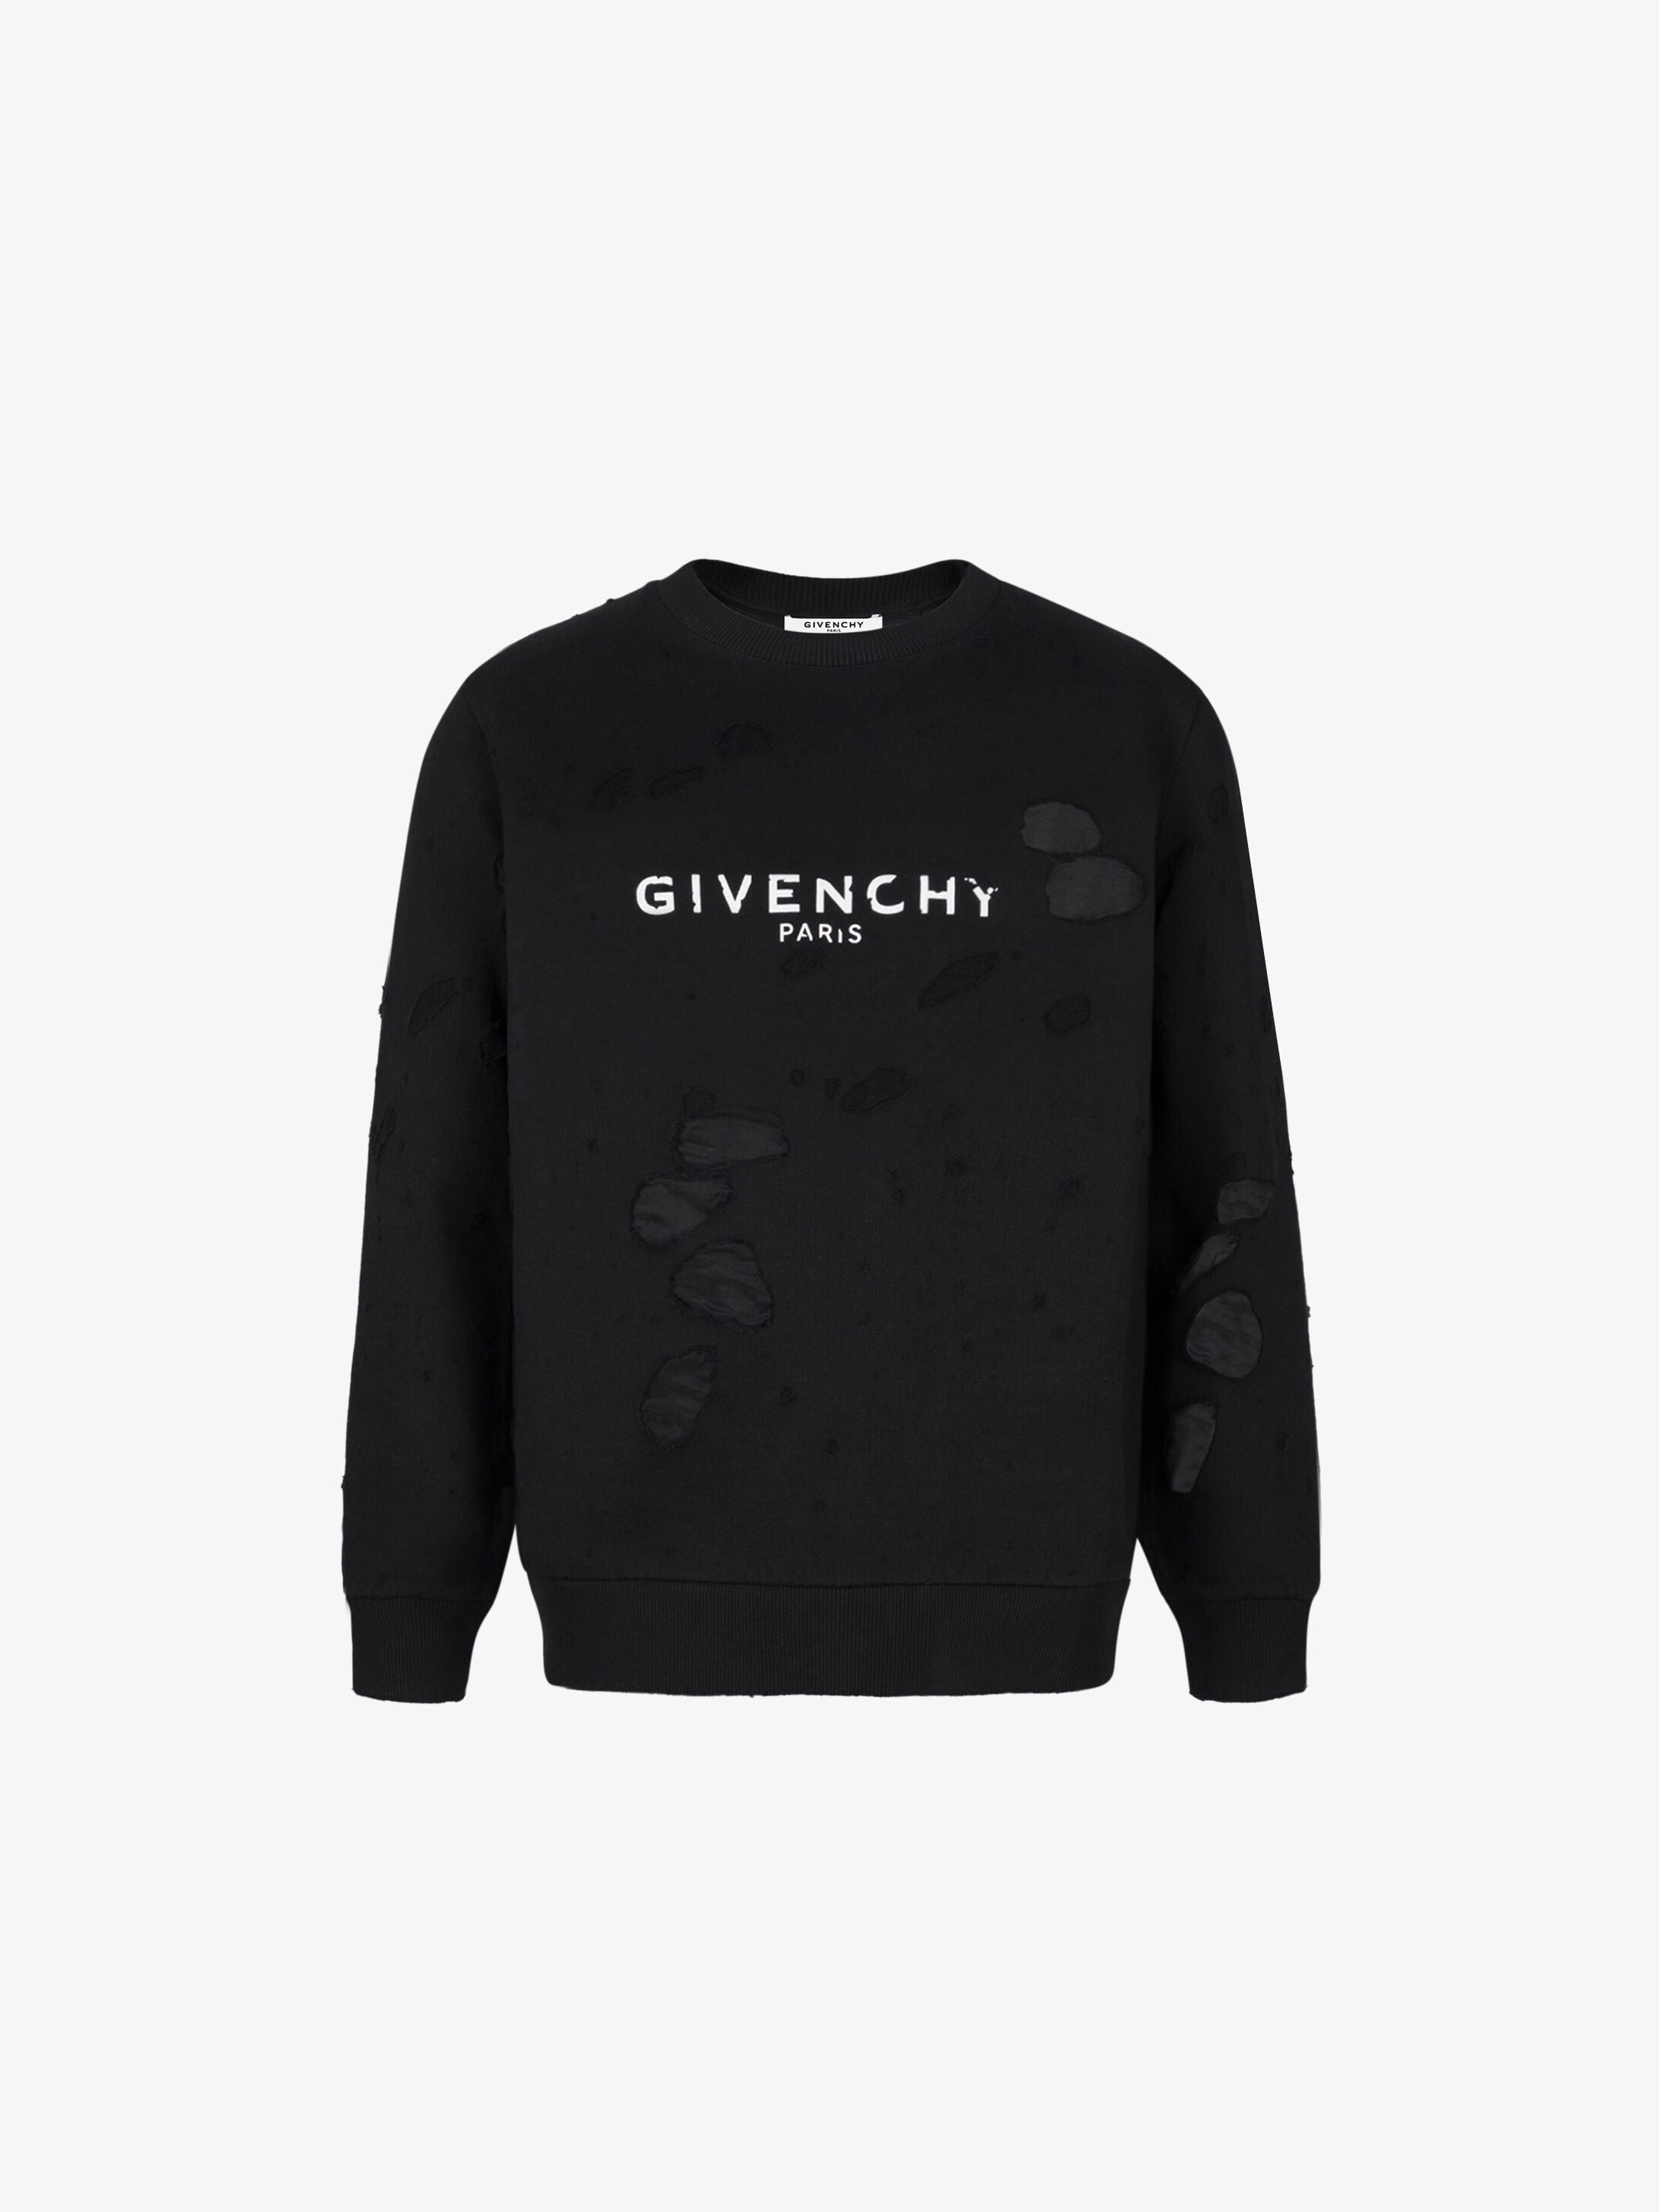 Givenchy PARIS destroyed sweatshirt | GIVENCHY Paris